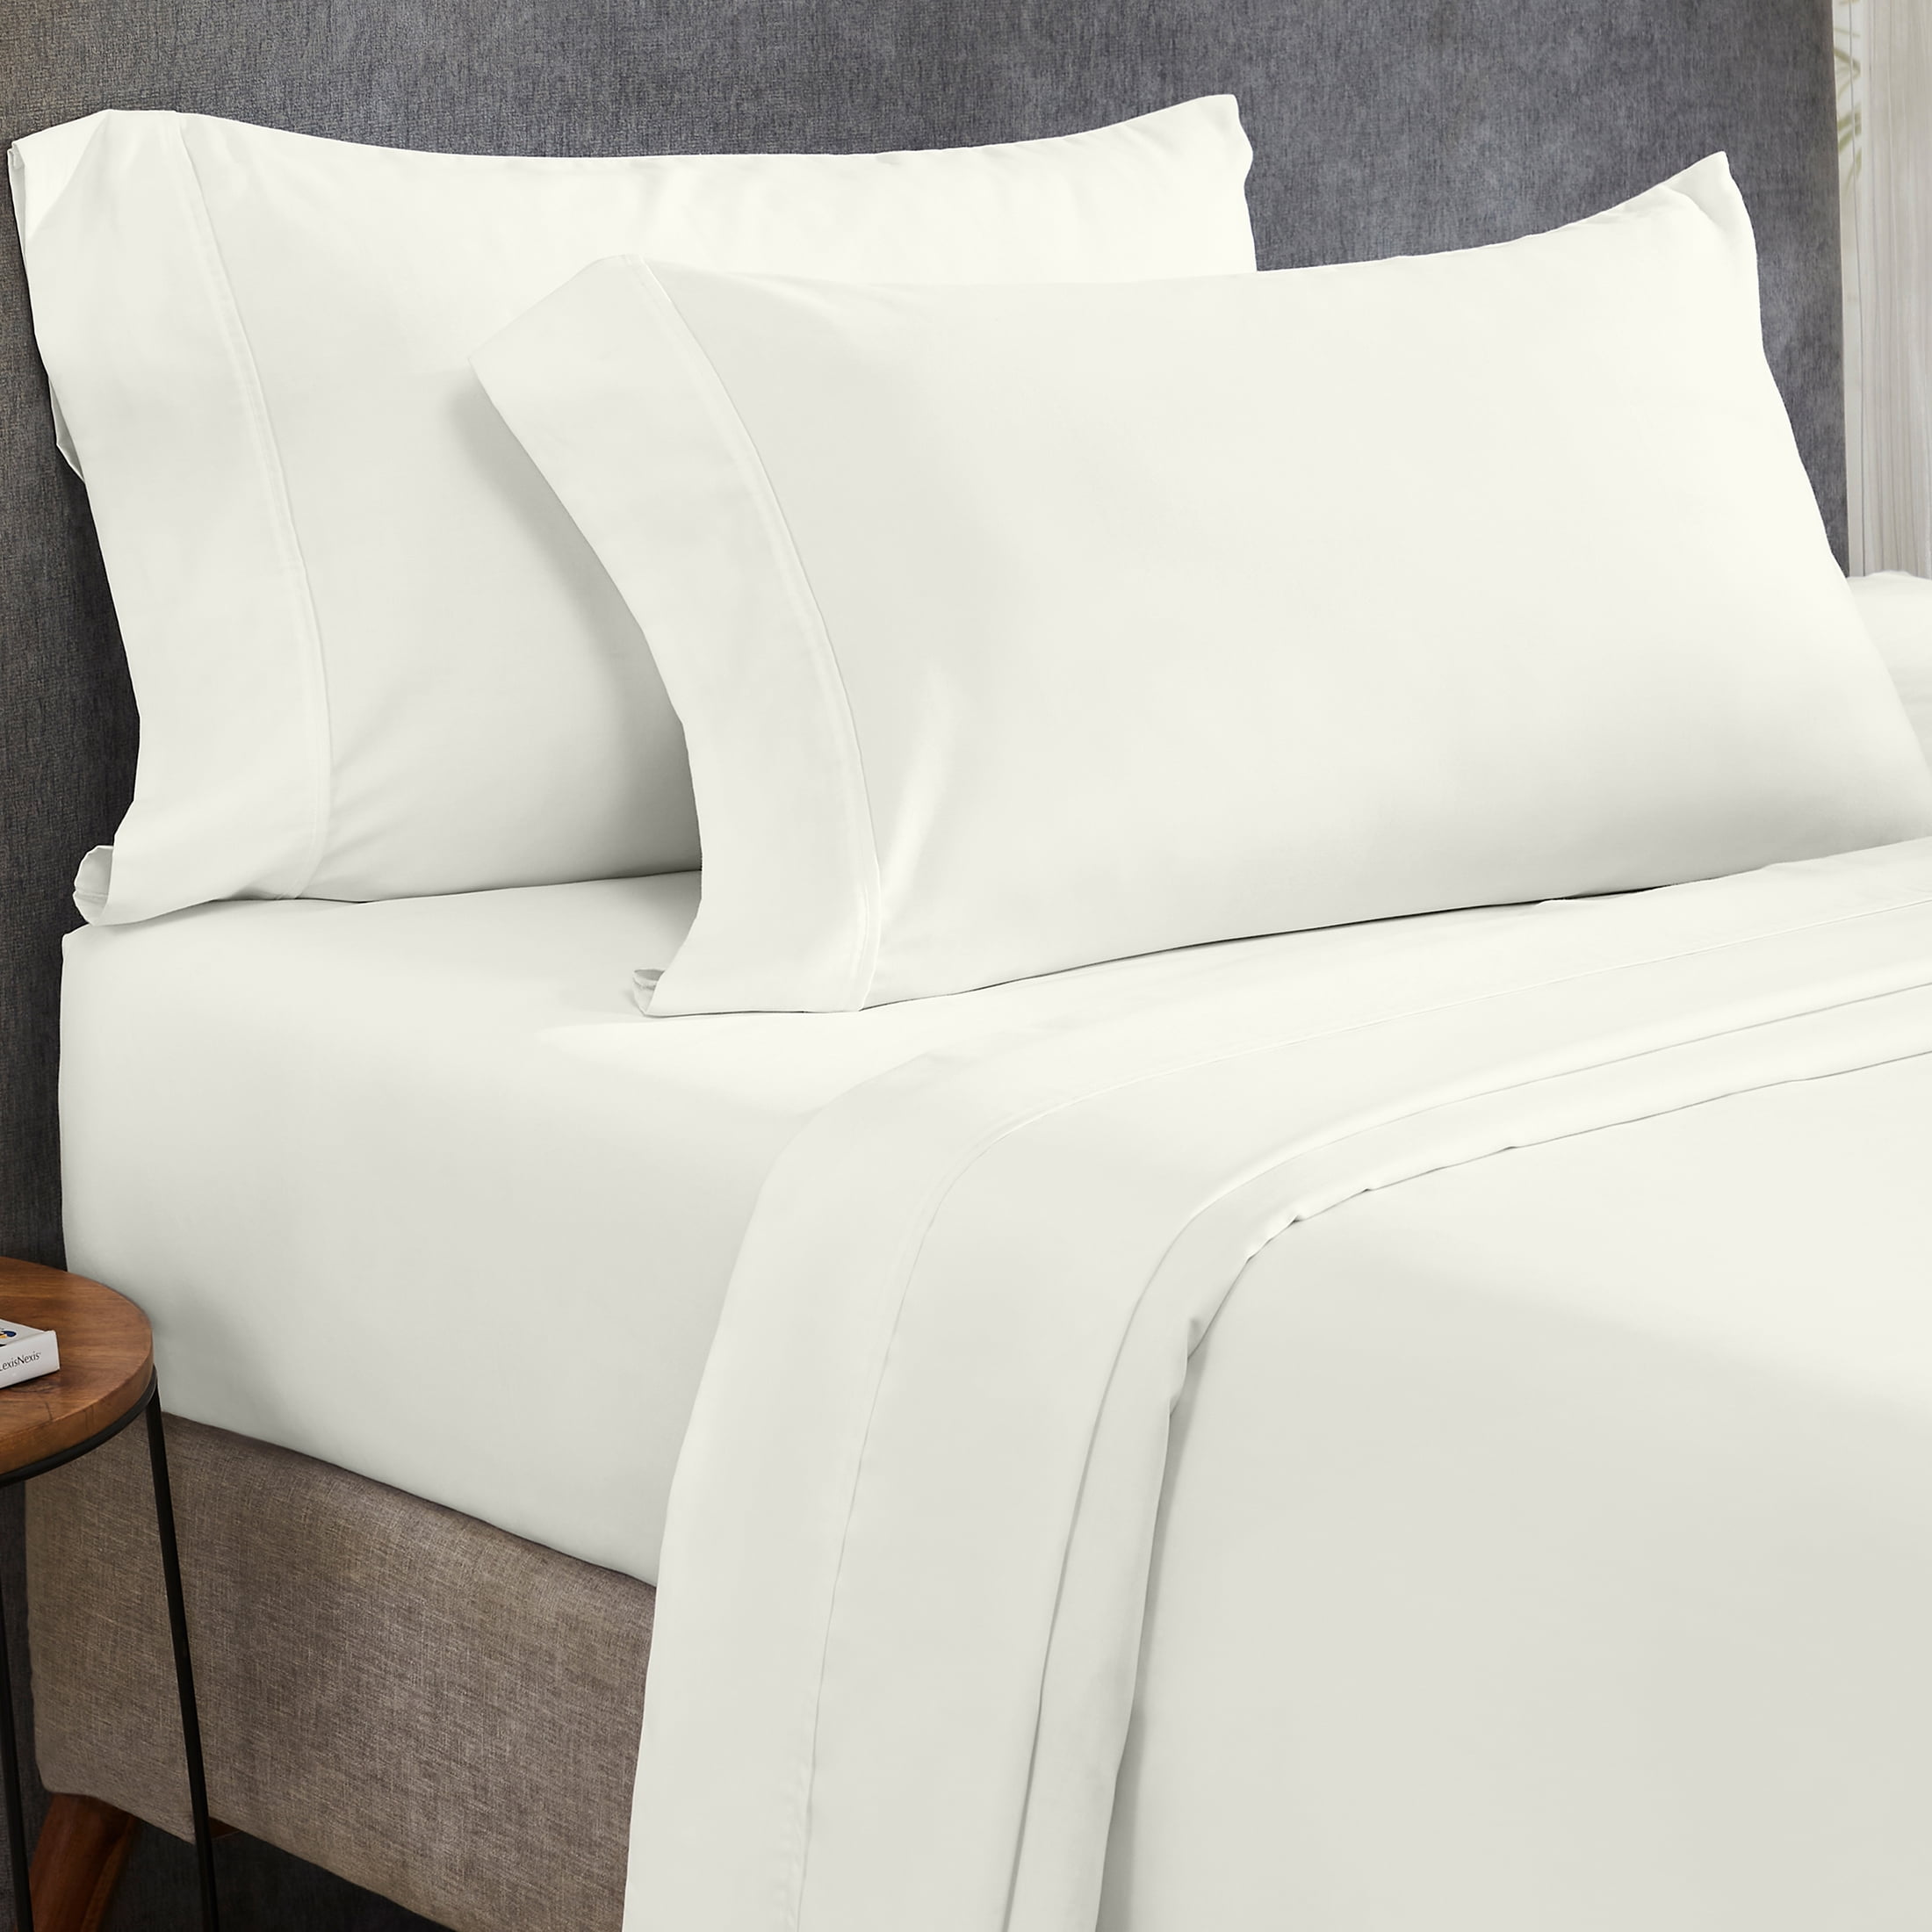 Details about   100% Cotton Deep Pocket Comfort Desire Bedding Items US Black Solid 